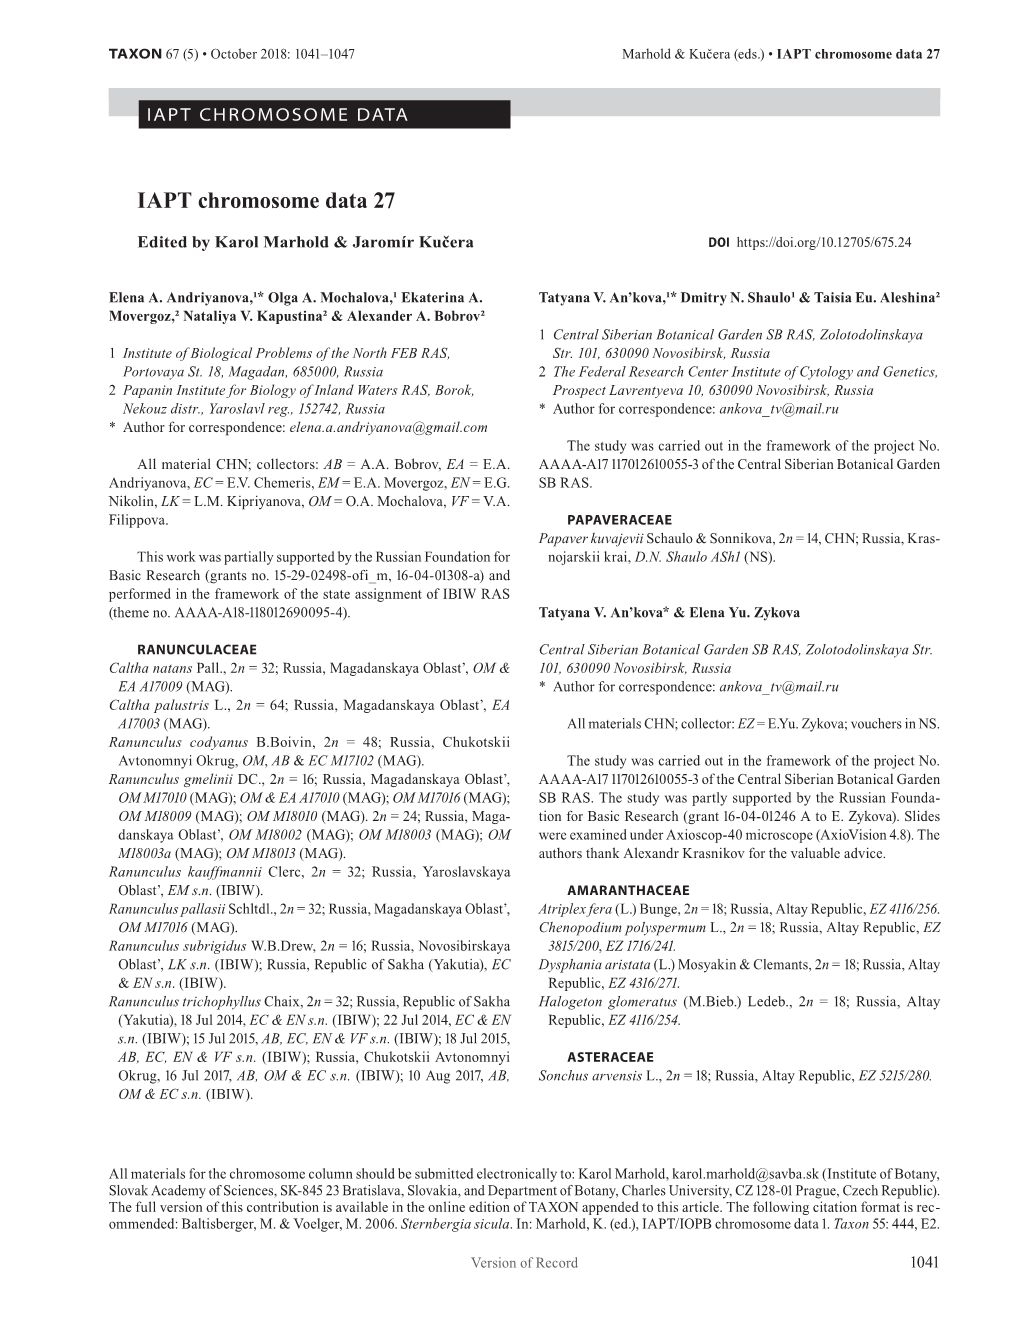 IAPT Chromosome Data 27